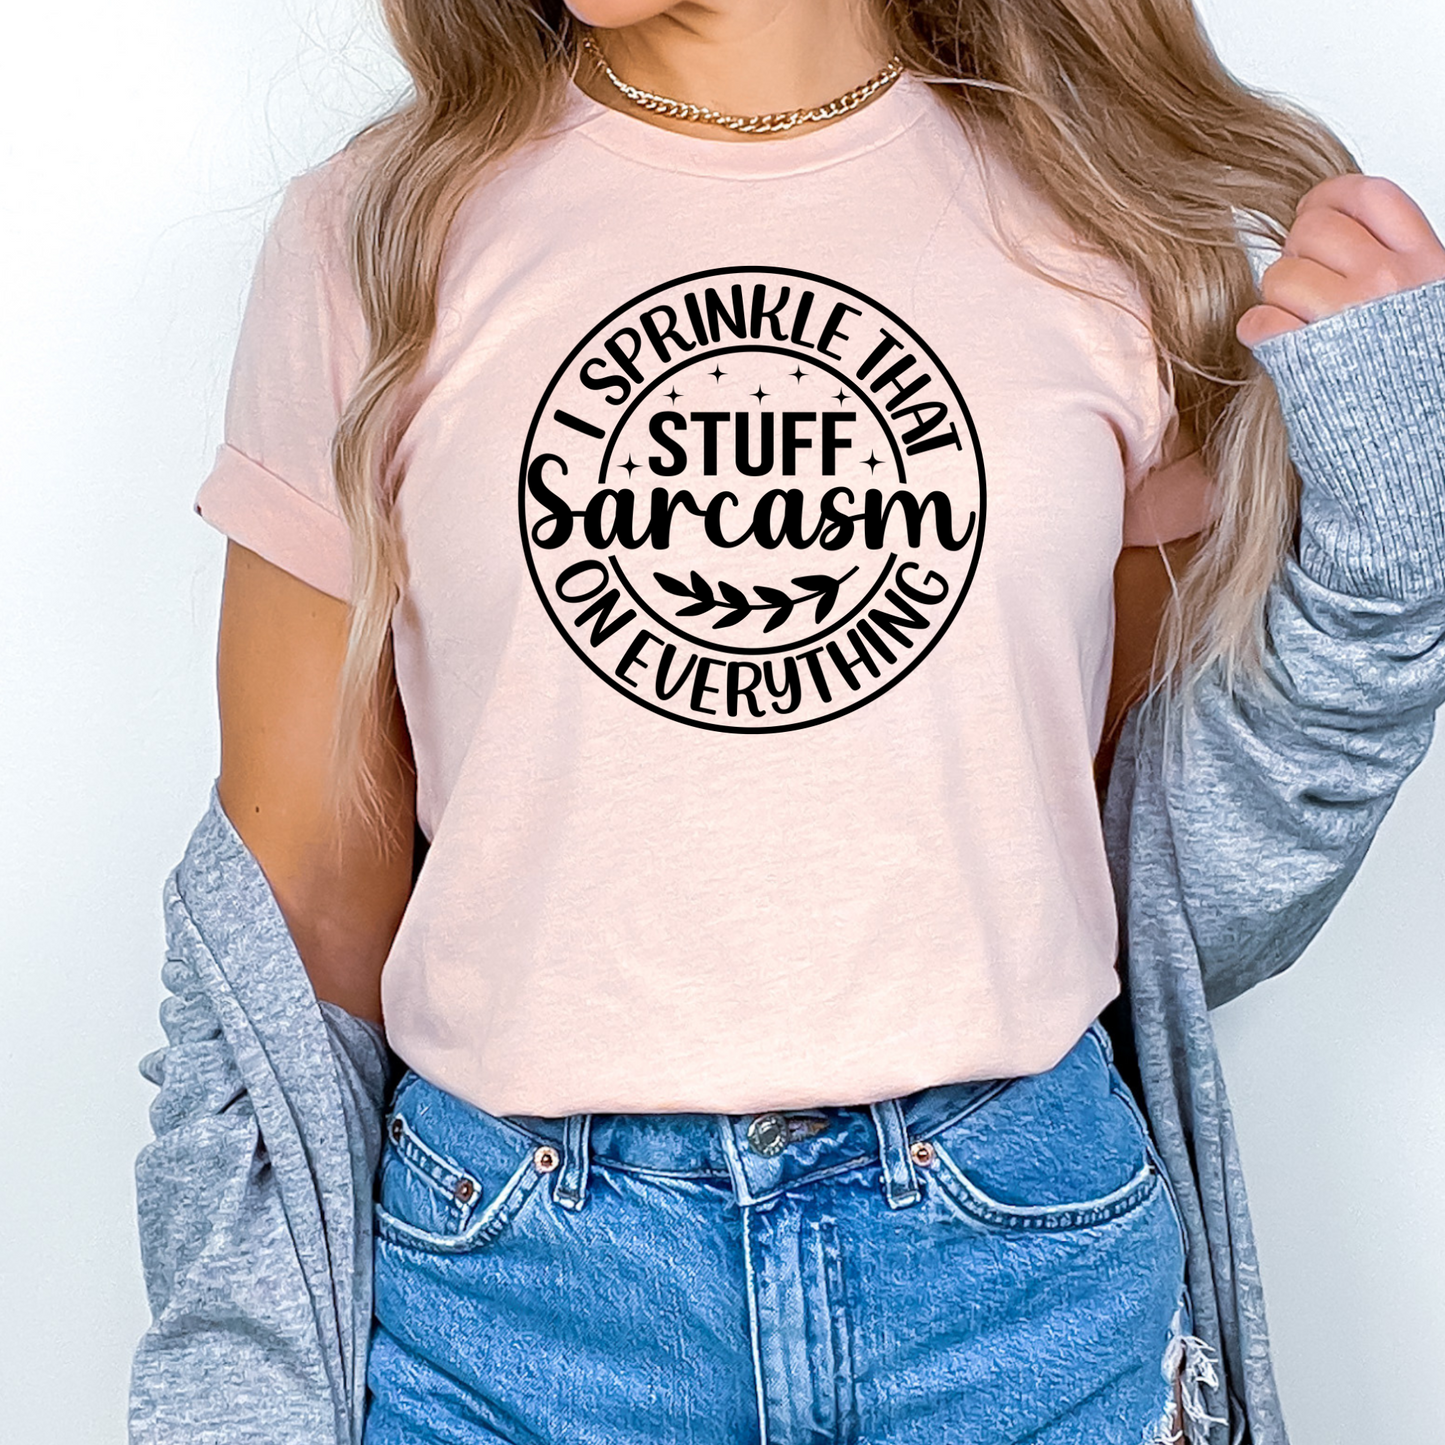 Sarcasm - I Sprinkle That Stuff on Everything TShirt